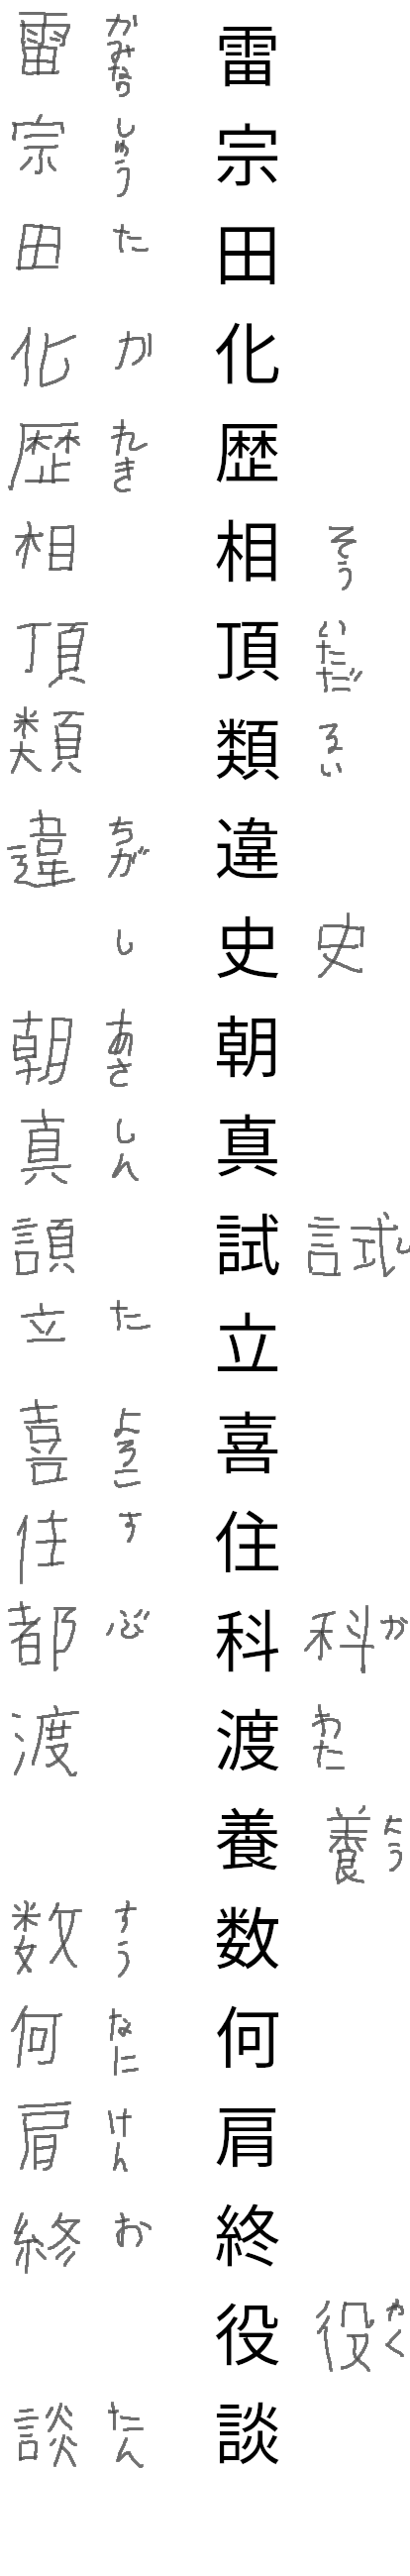 kanji test row 27